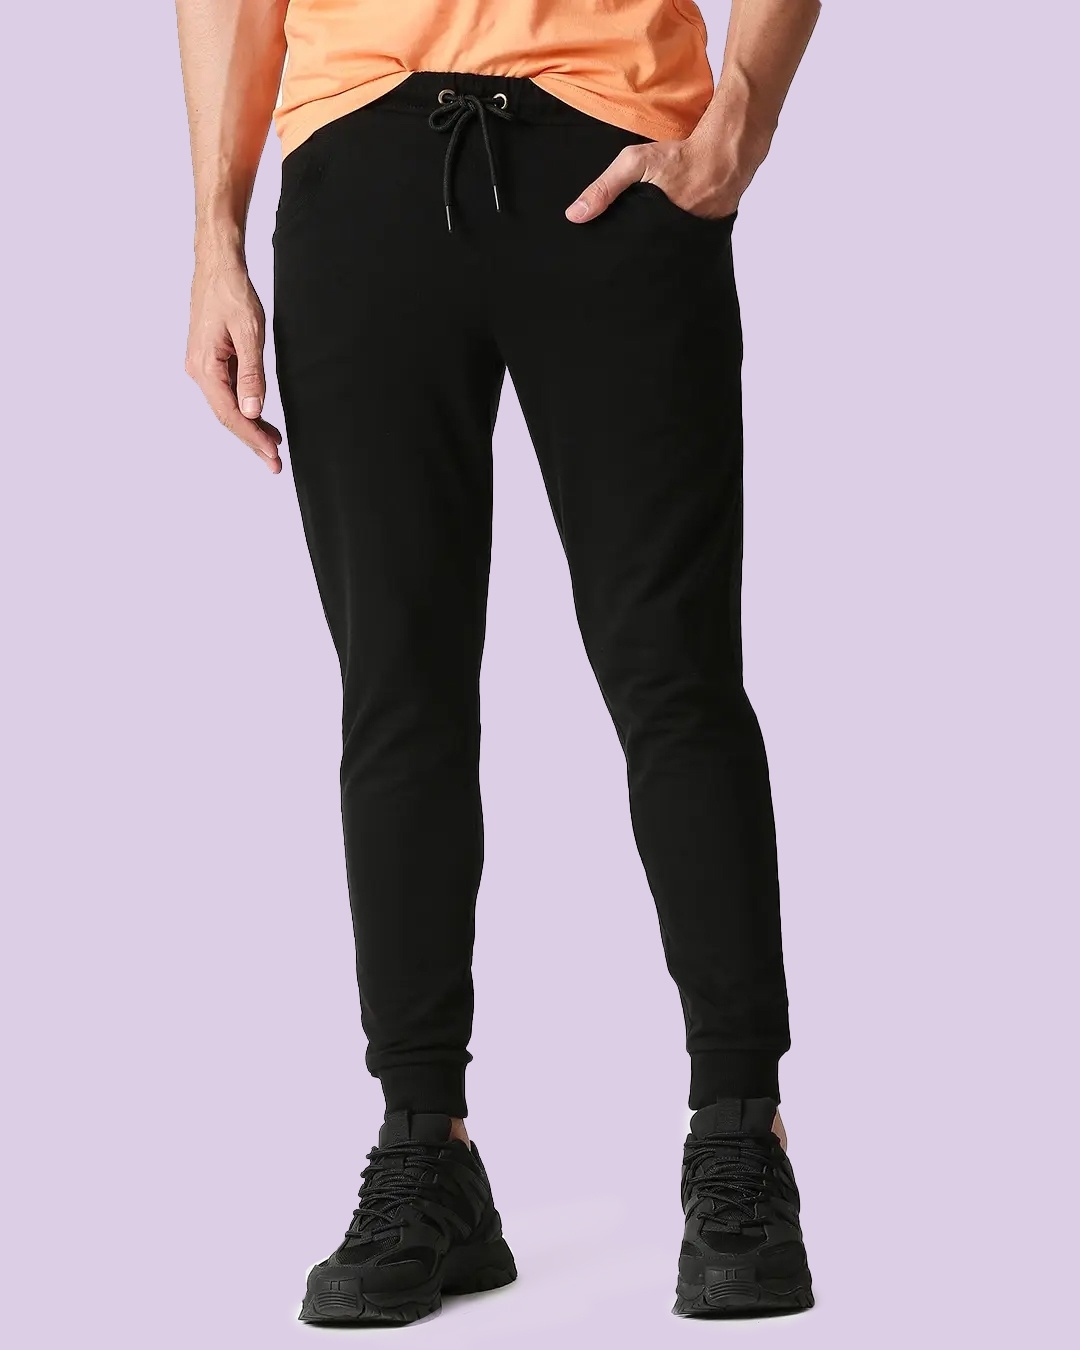 Black Sweatpants for Tall Guys: Men's Tall Fleece Black Jogger